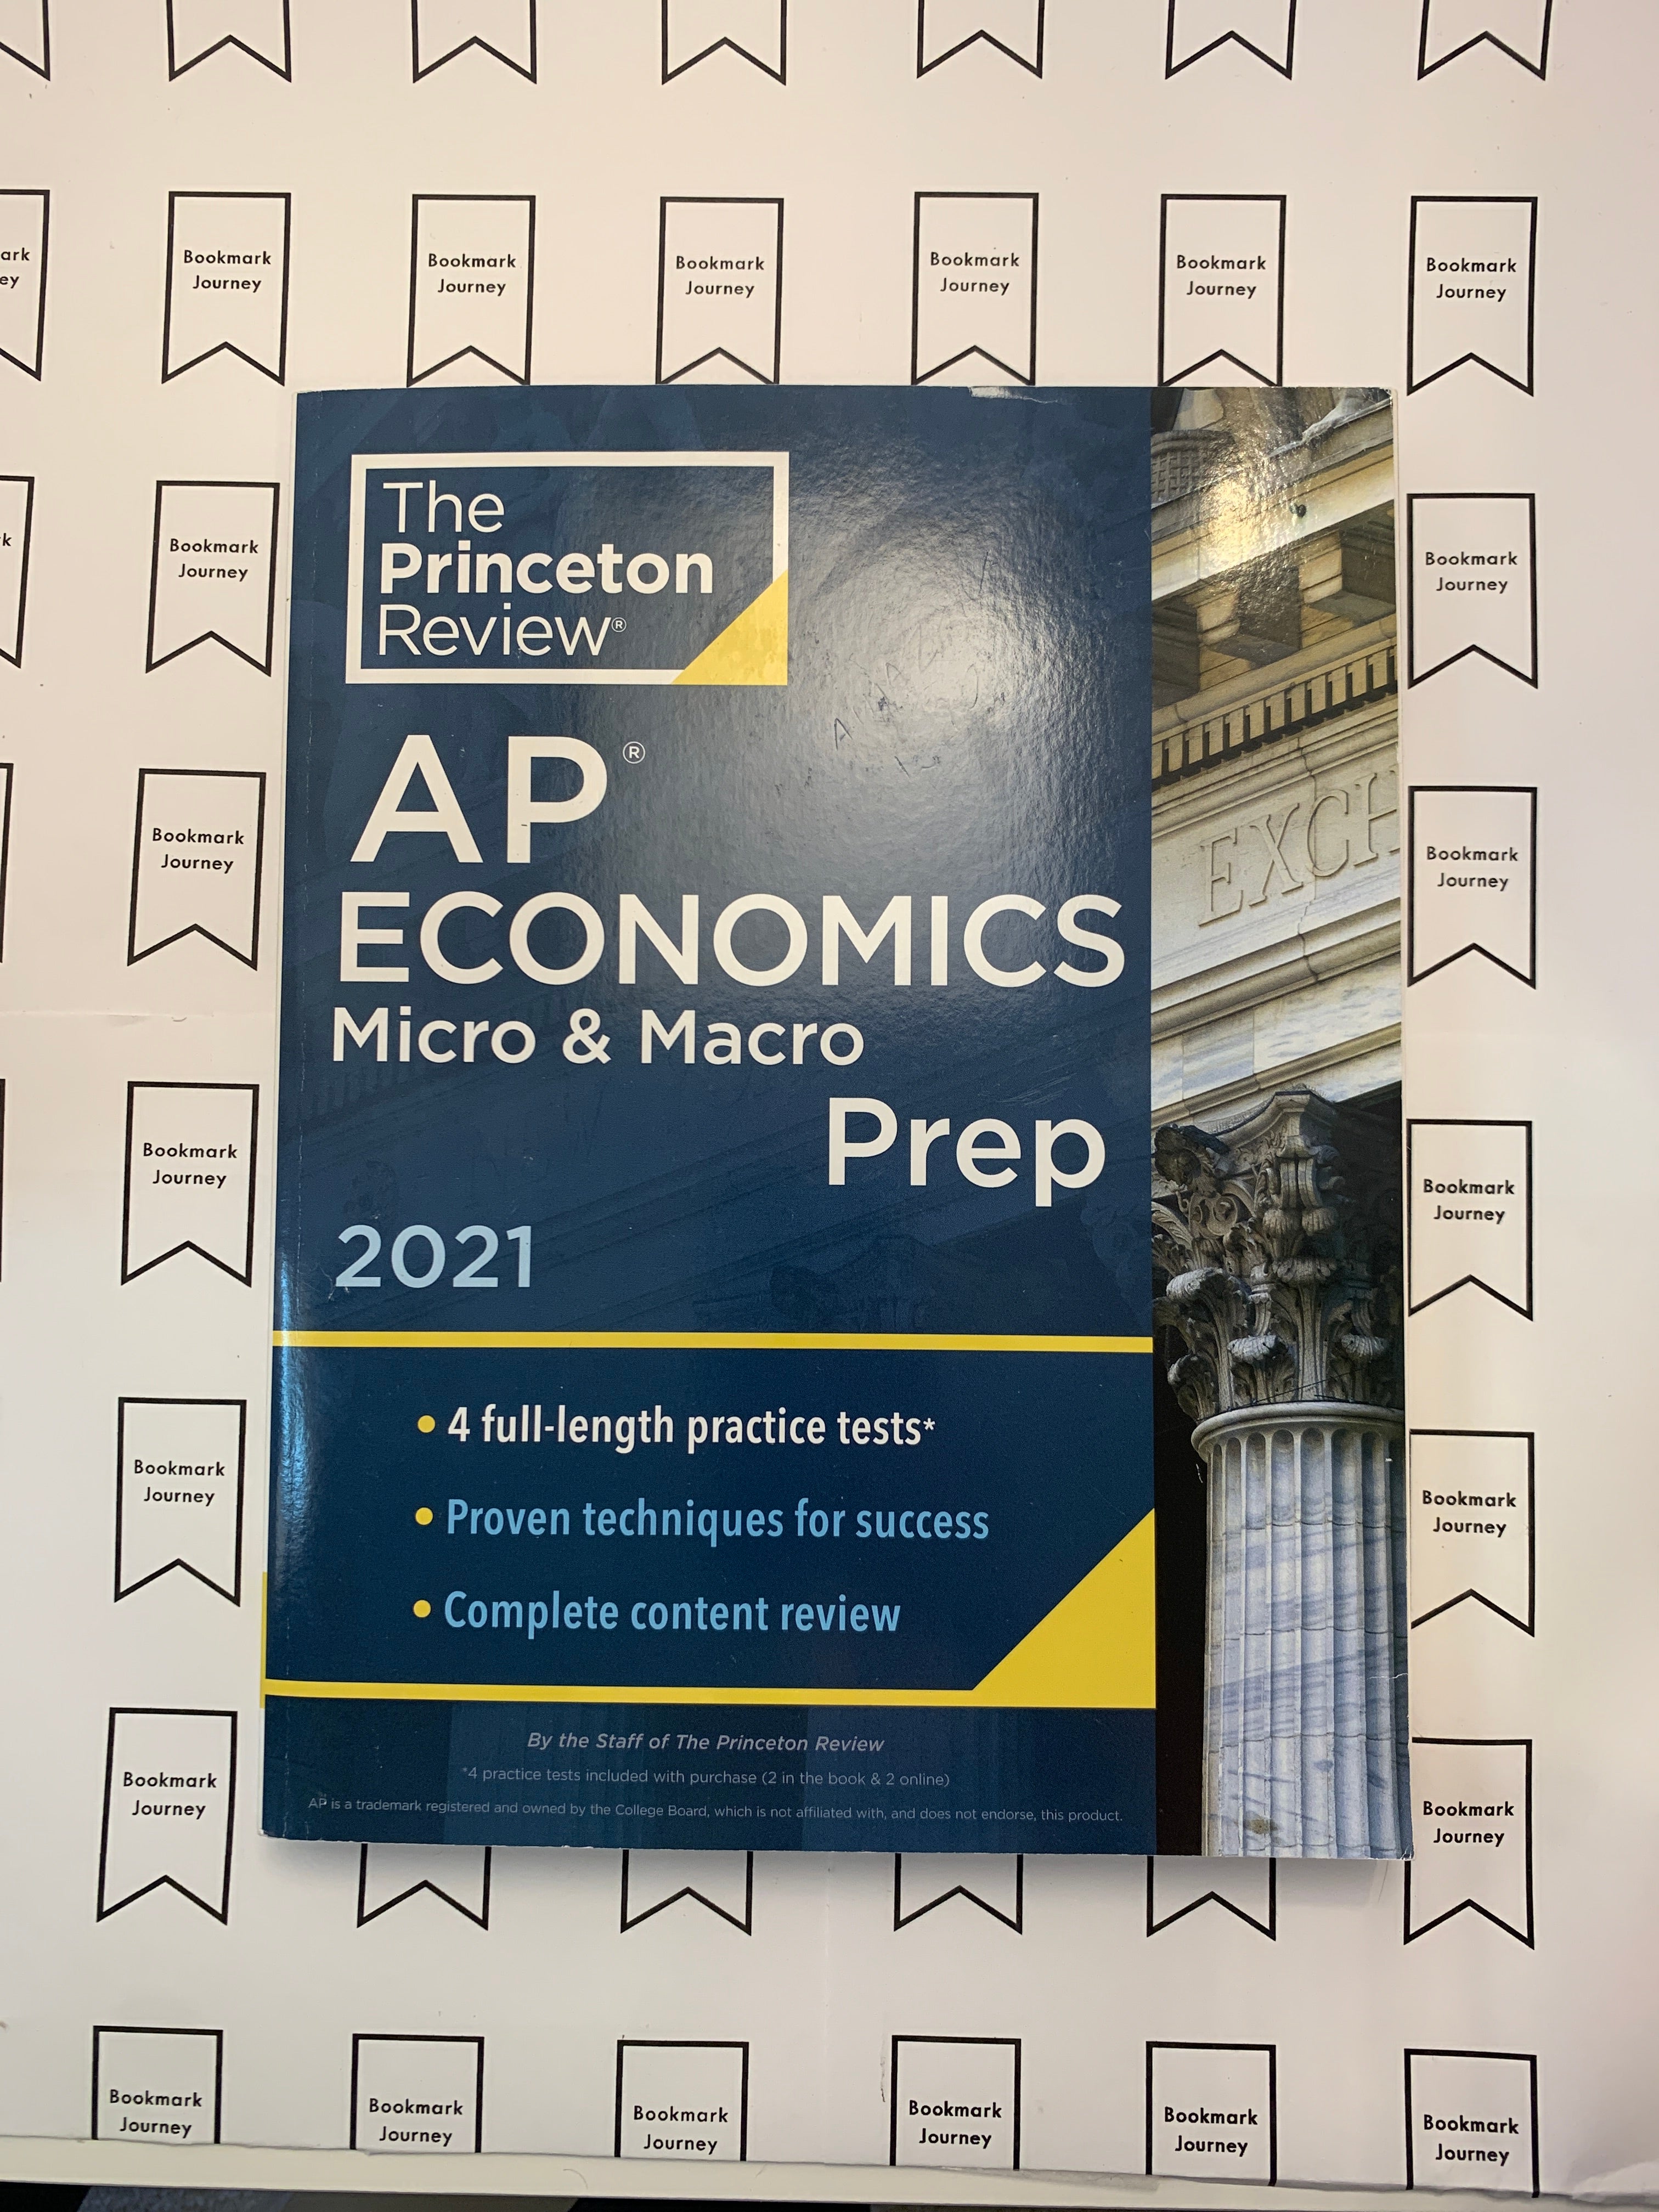 Paperback　Princeton　Princeton　Review,　Pangobooks　and　Prep　Review　The　AP　The　by　Economics　Micro　2021　Macro　Princeton